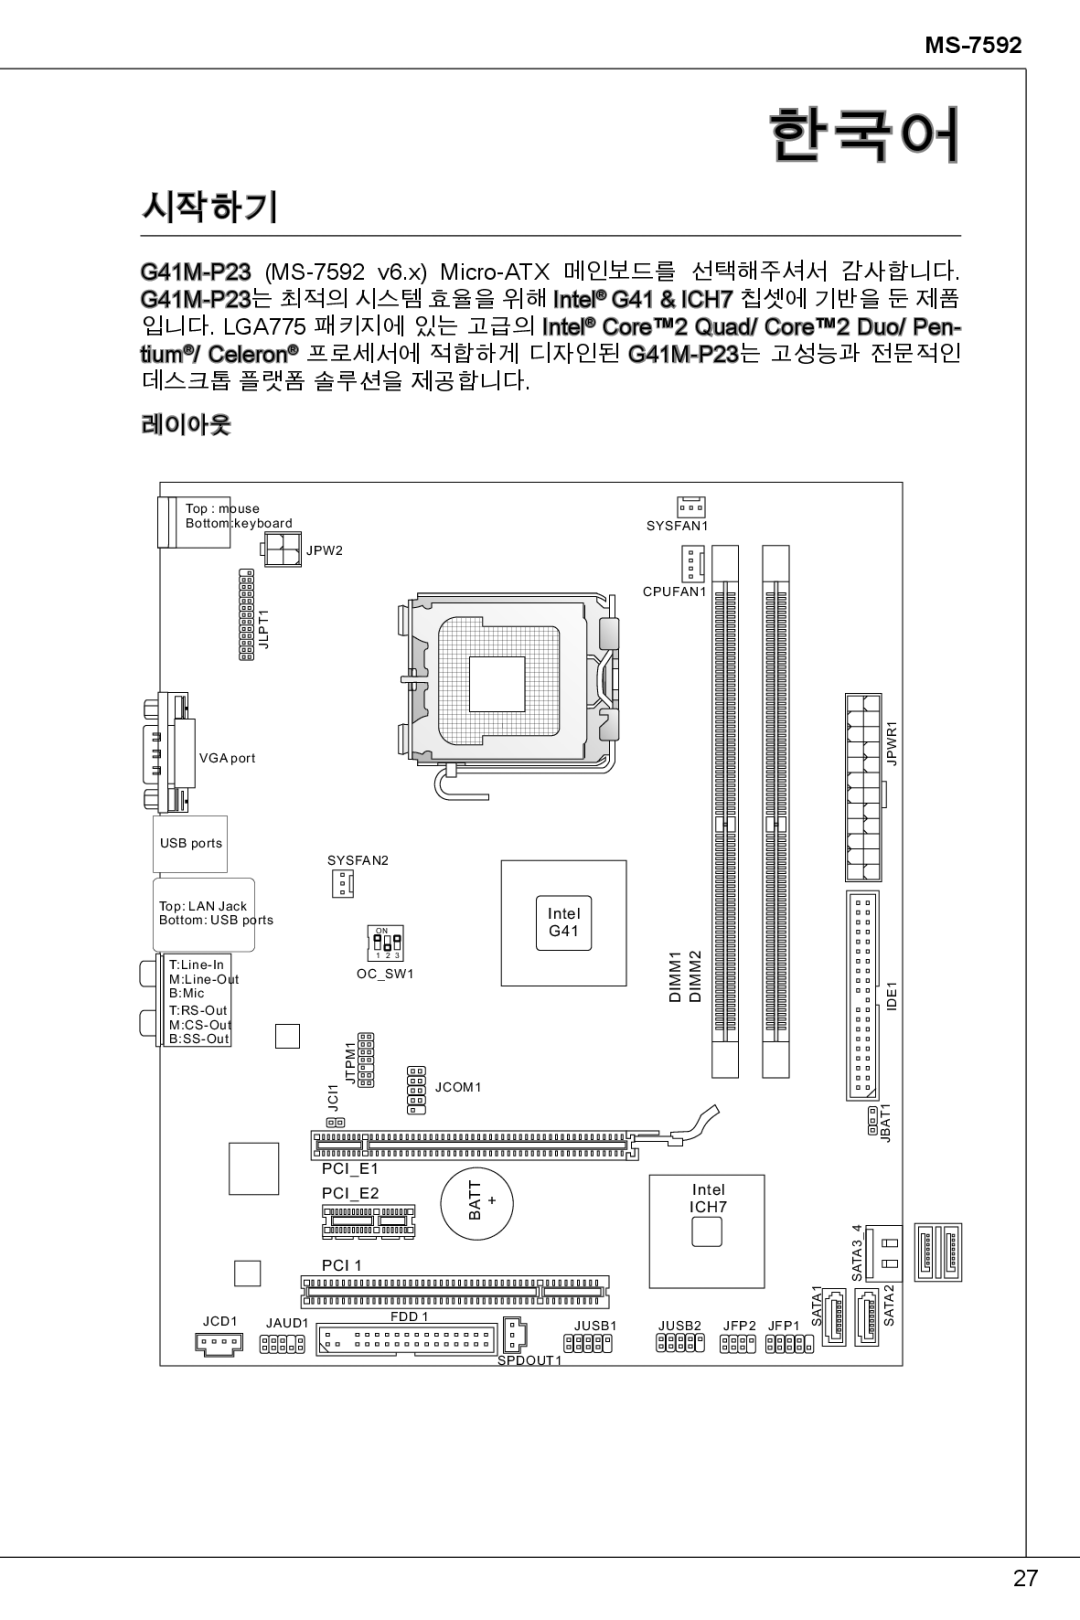 MSI G41M-P23 manual 한국어, 시작하기 